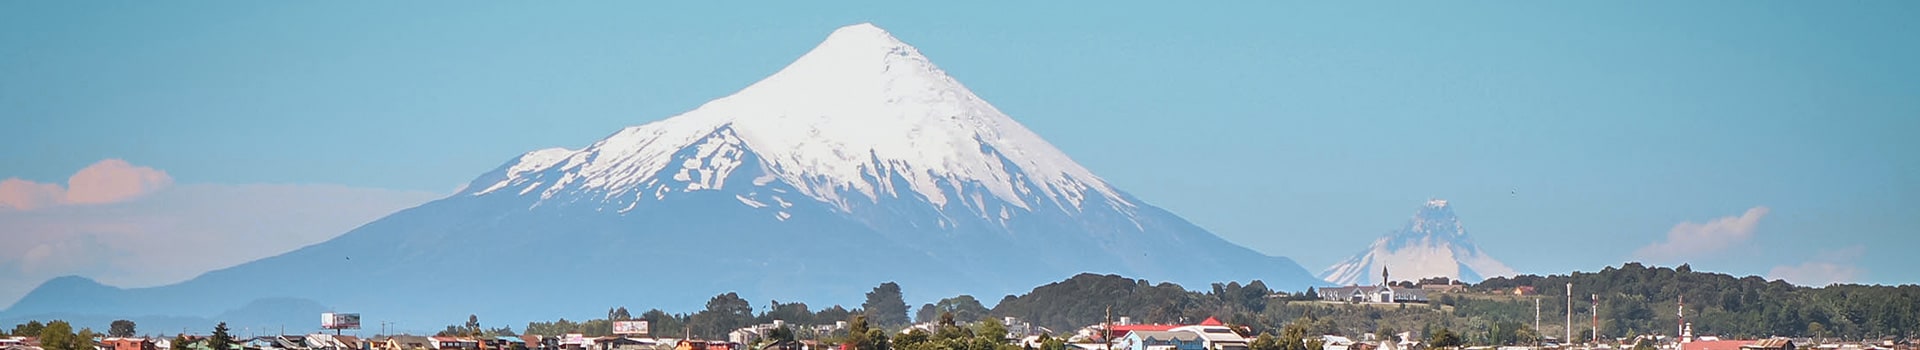 Santiago du chili - Puerto montt - el tepual